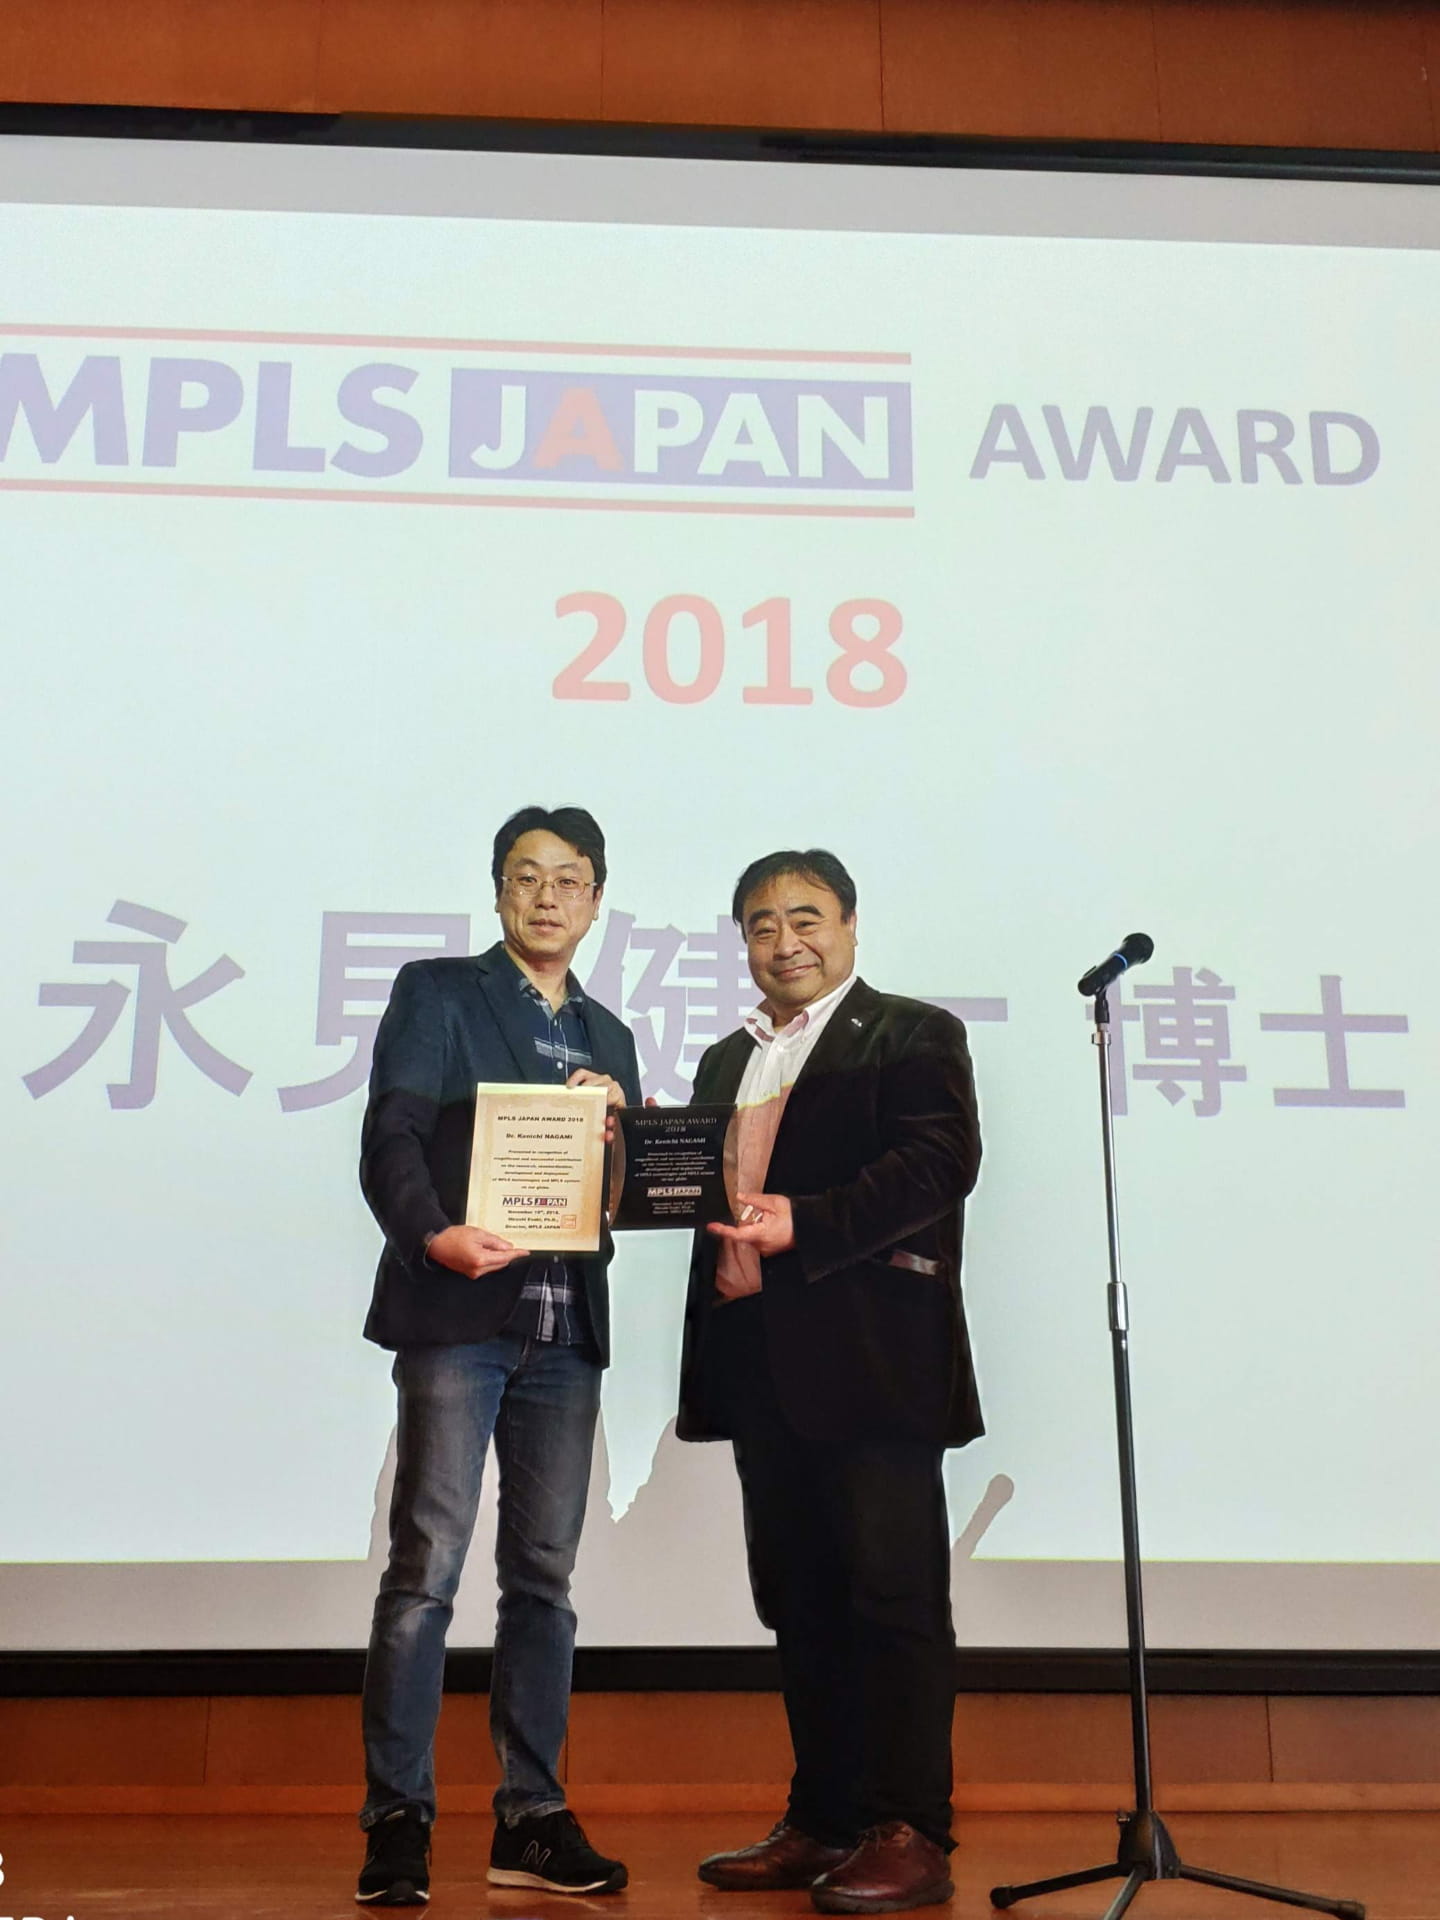 MPLS JAPAN Award 2018 winners